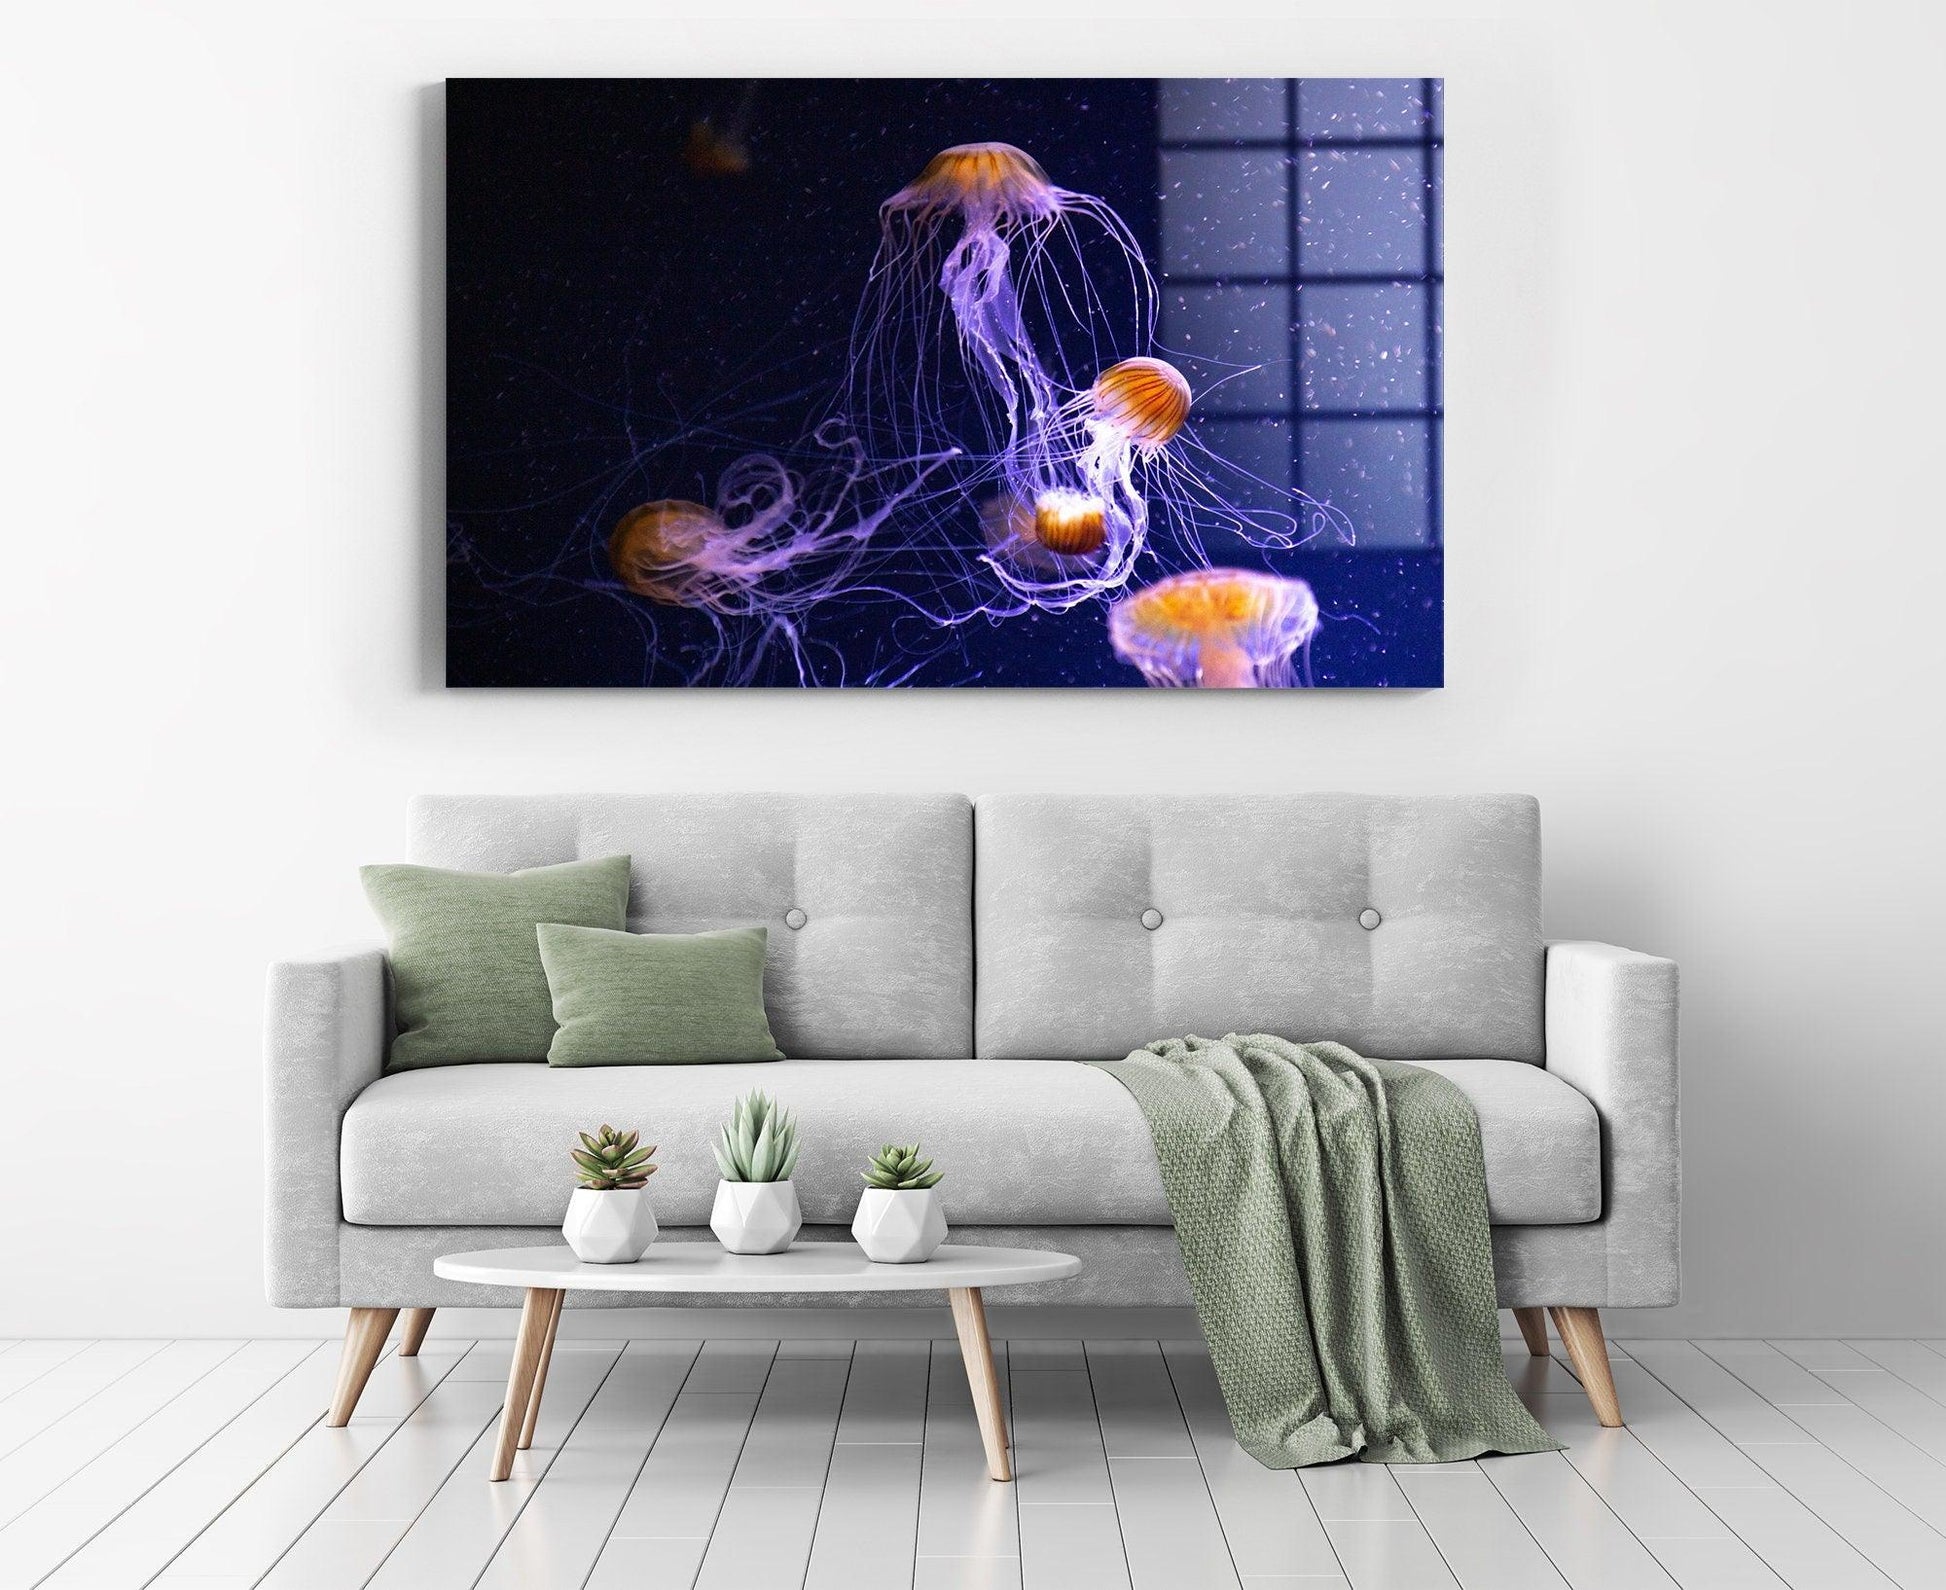 Jellyfish Tempered Glass Wall Art| Jellyfish Large Wall Art, Glass Printing Wall Art, Glass Art Wall Decor, Home Decor, Animal Wall Decor - TrendiArt